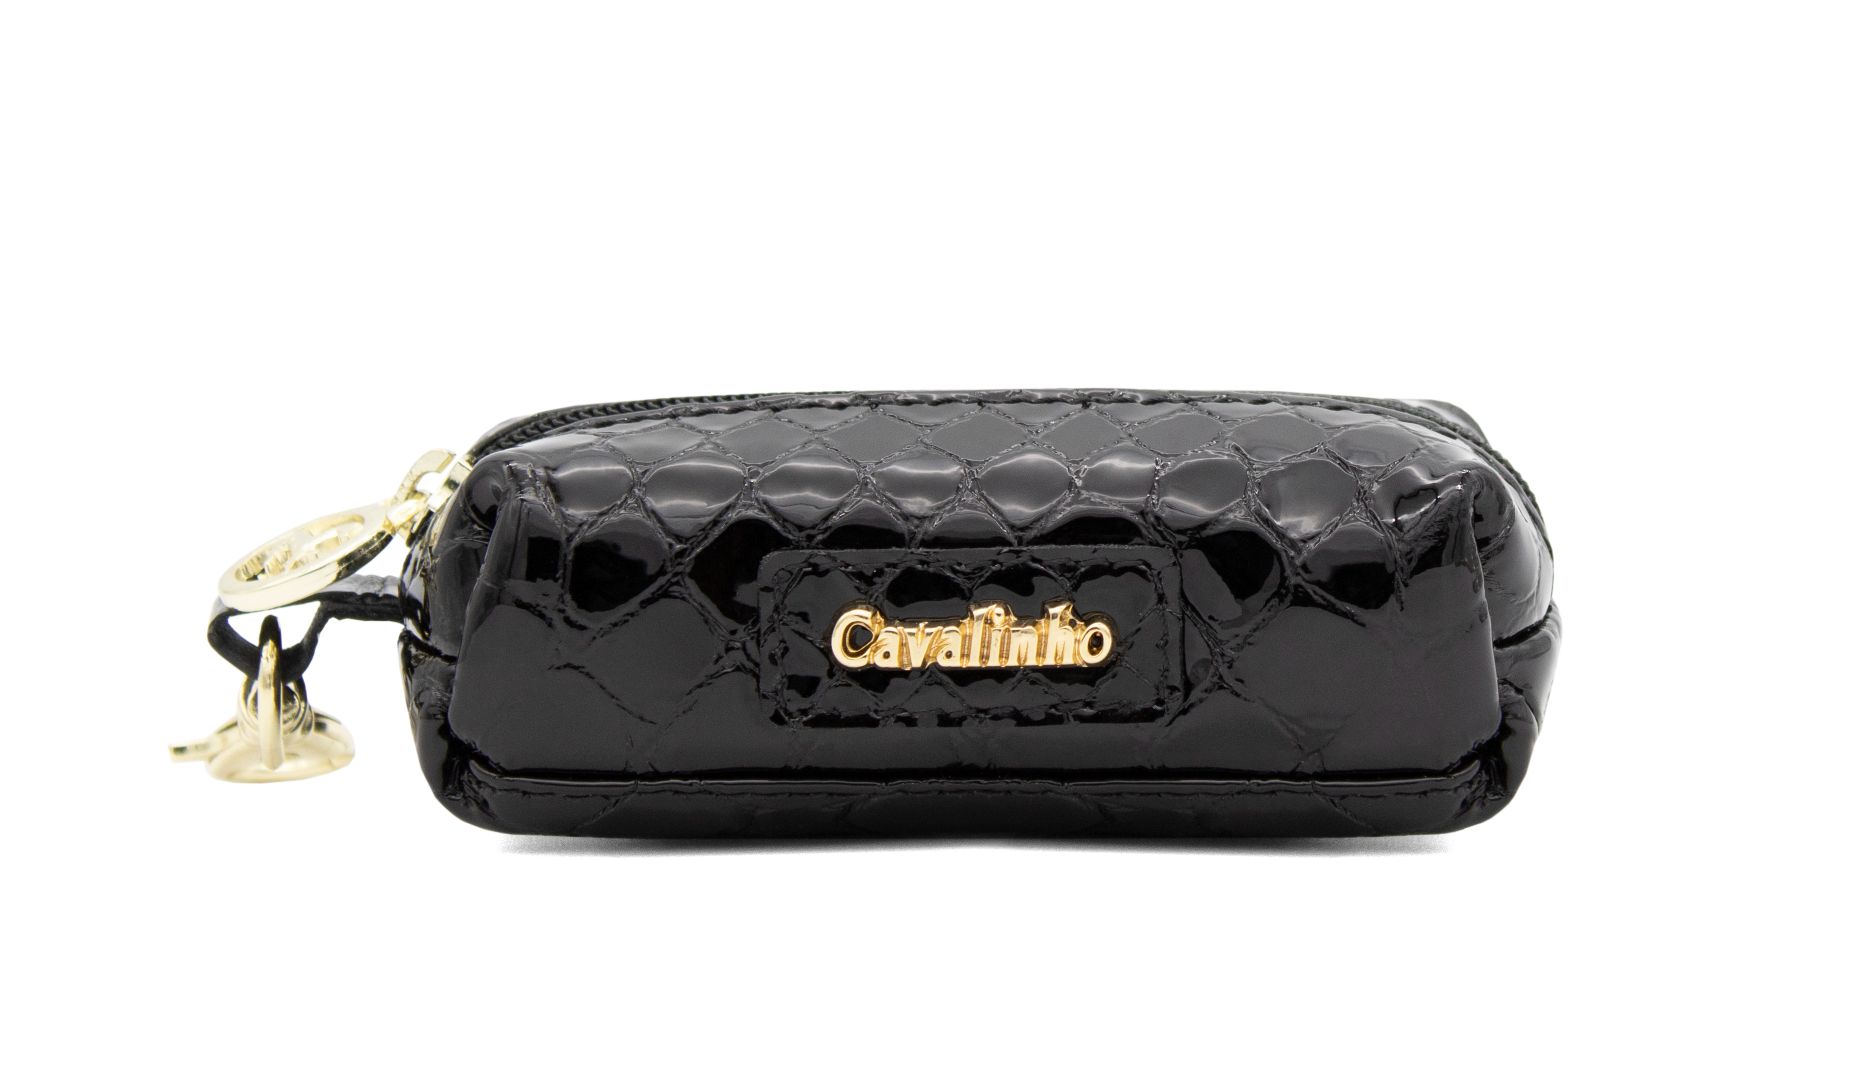 Cavalinho Gallop Patent Leather Change Purse - Black - 28170276.01_1